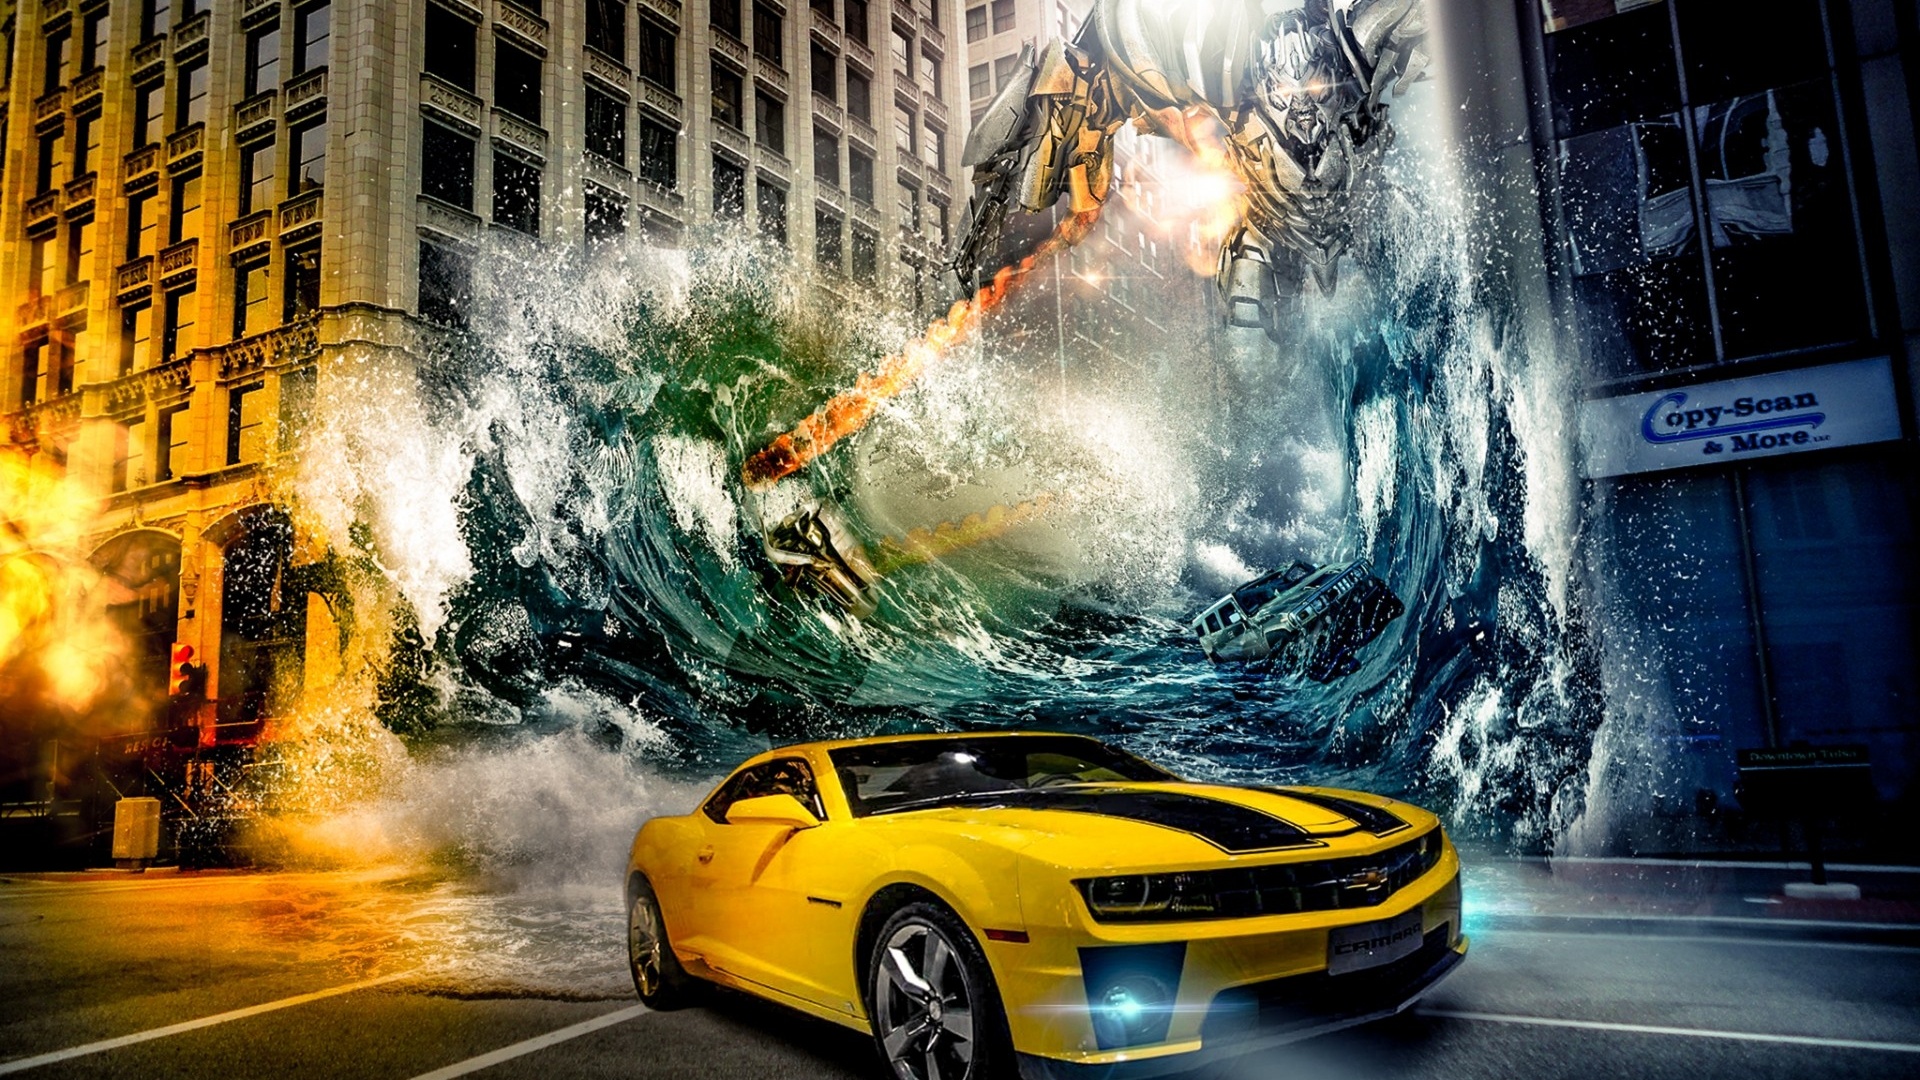  Transformers  Backgrounds  Pictures PixelsTalk Net